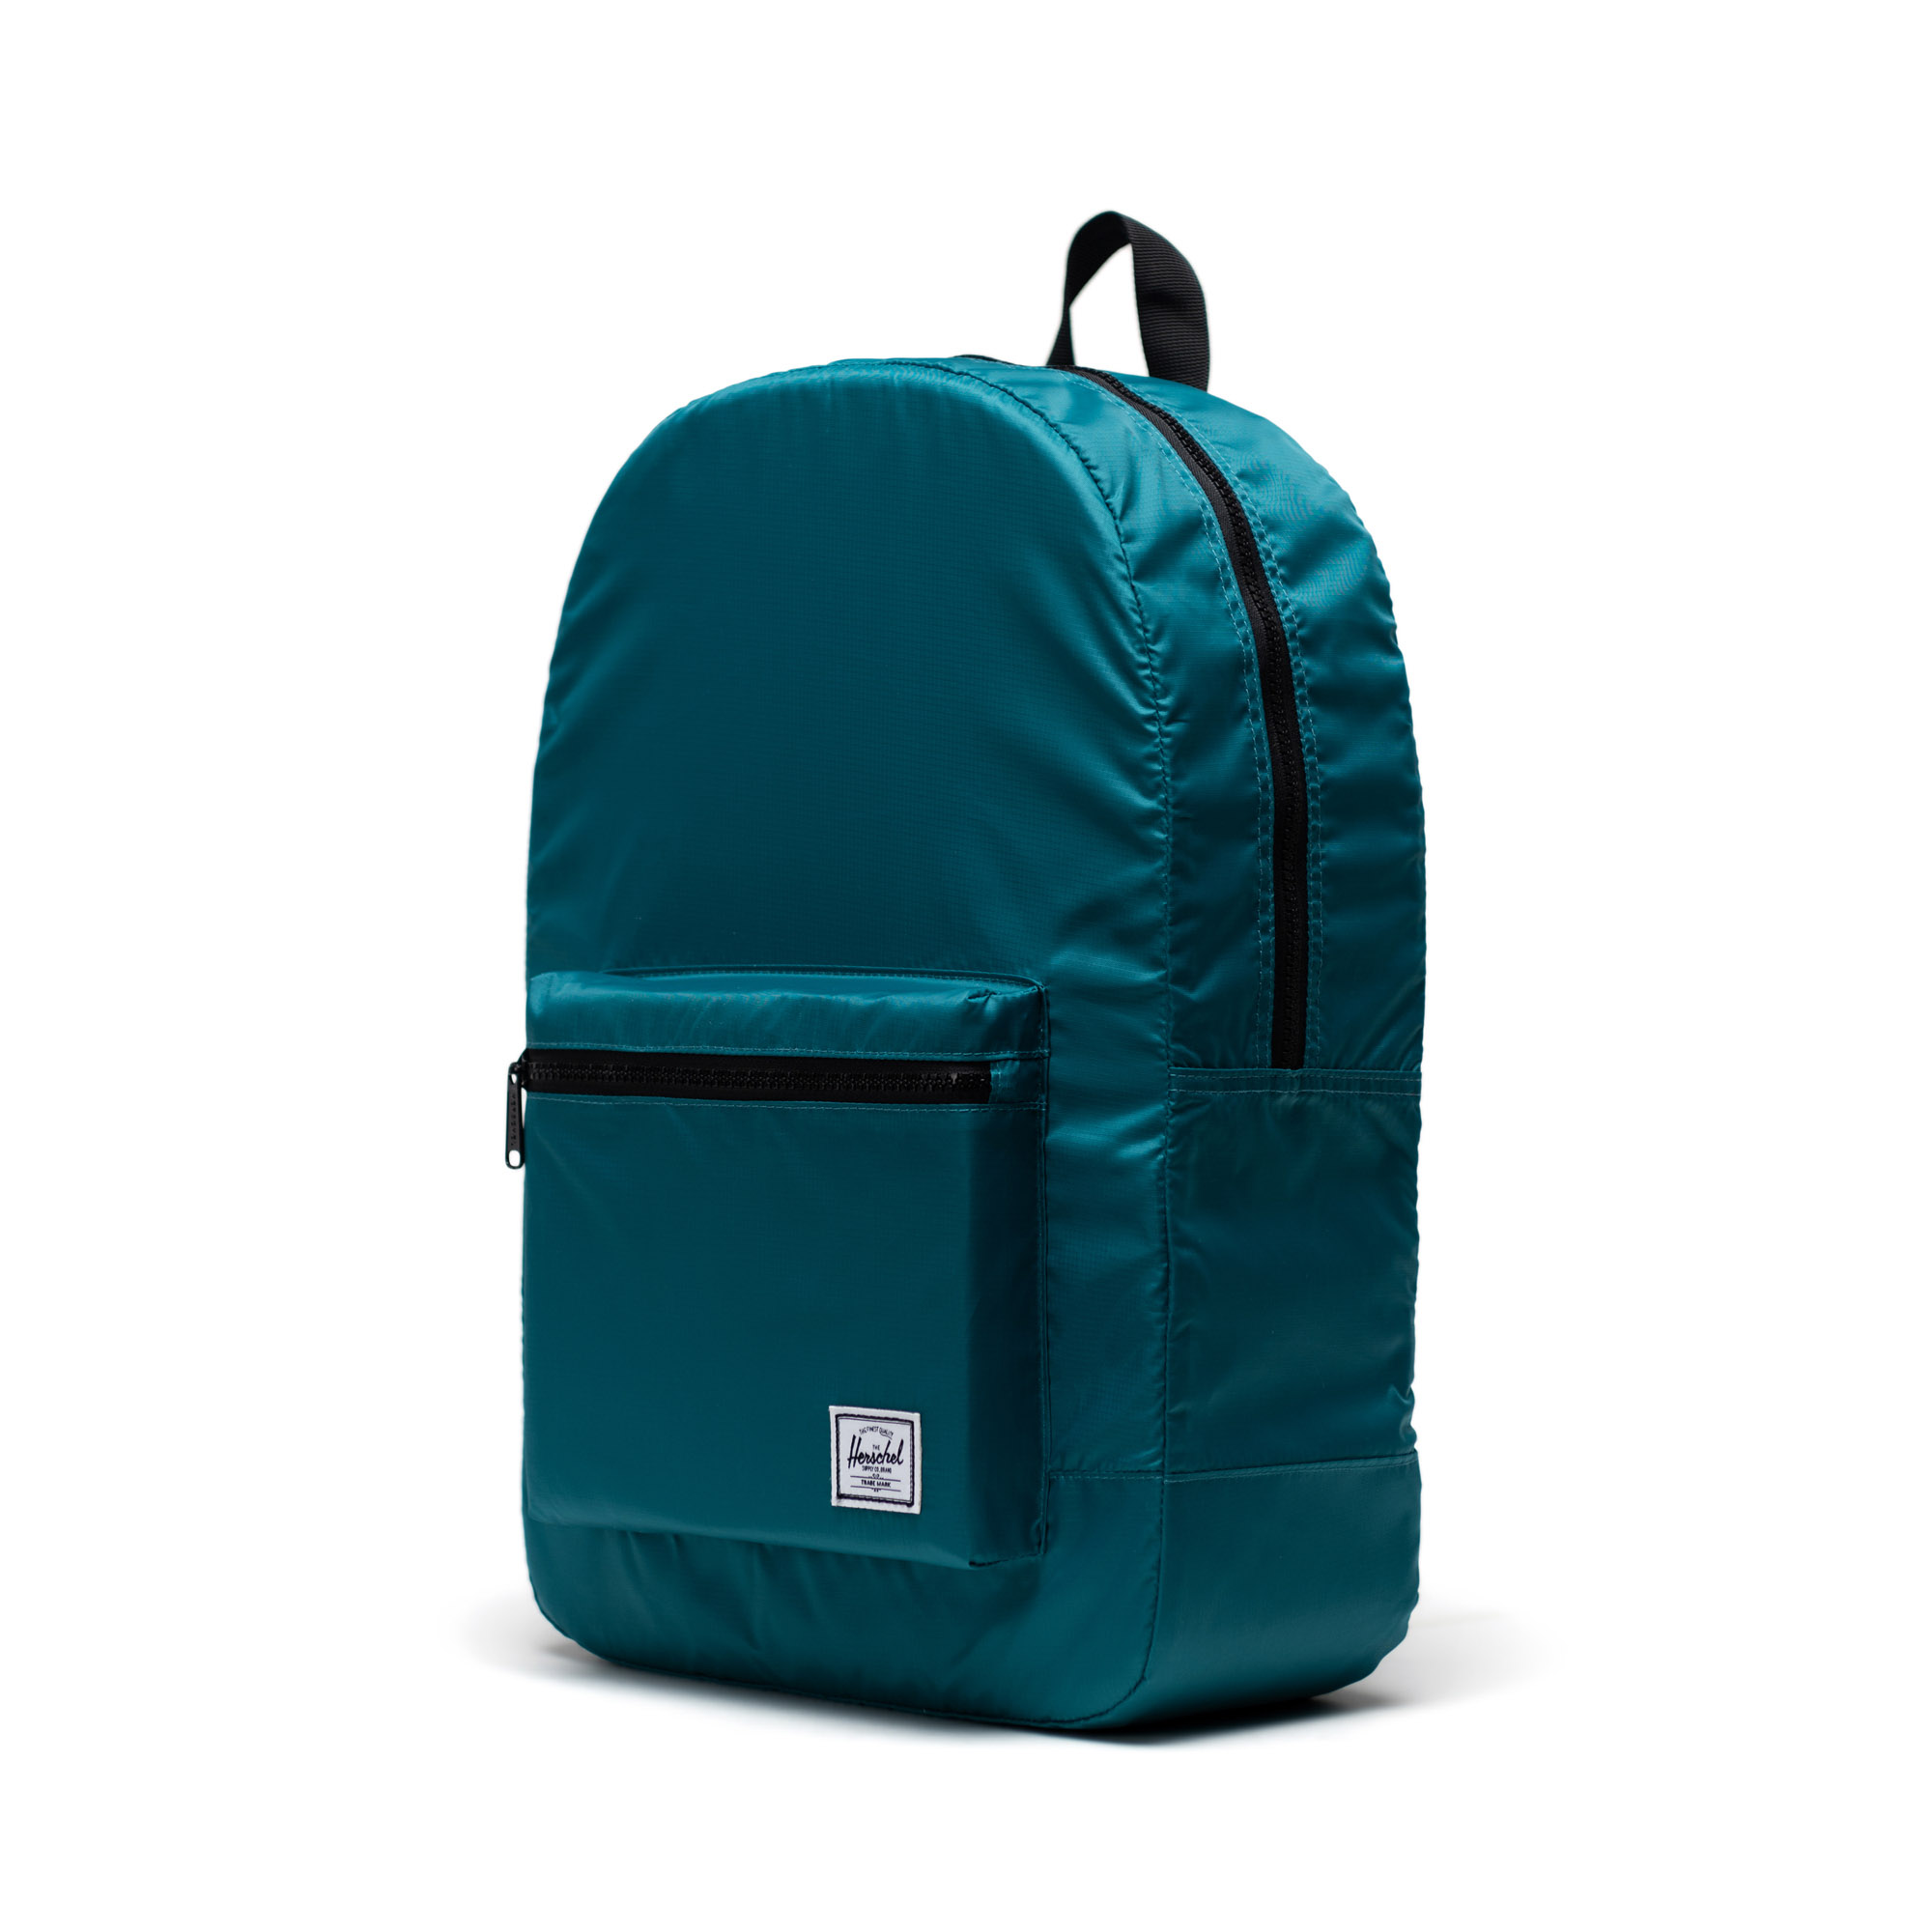 Herschel Classic Xl Backpack - Daypack, Comprar online